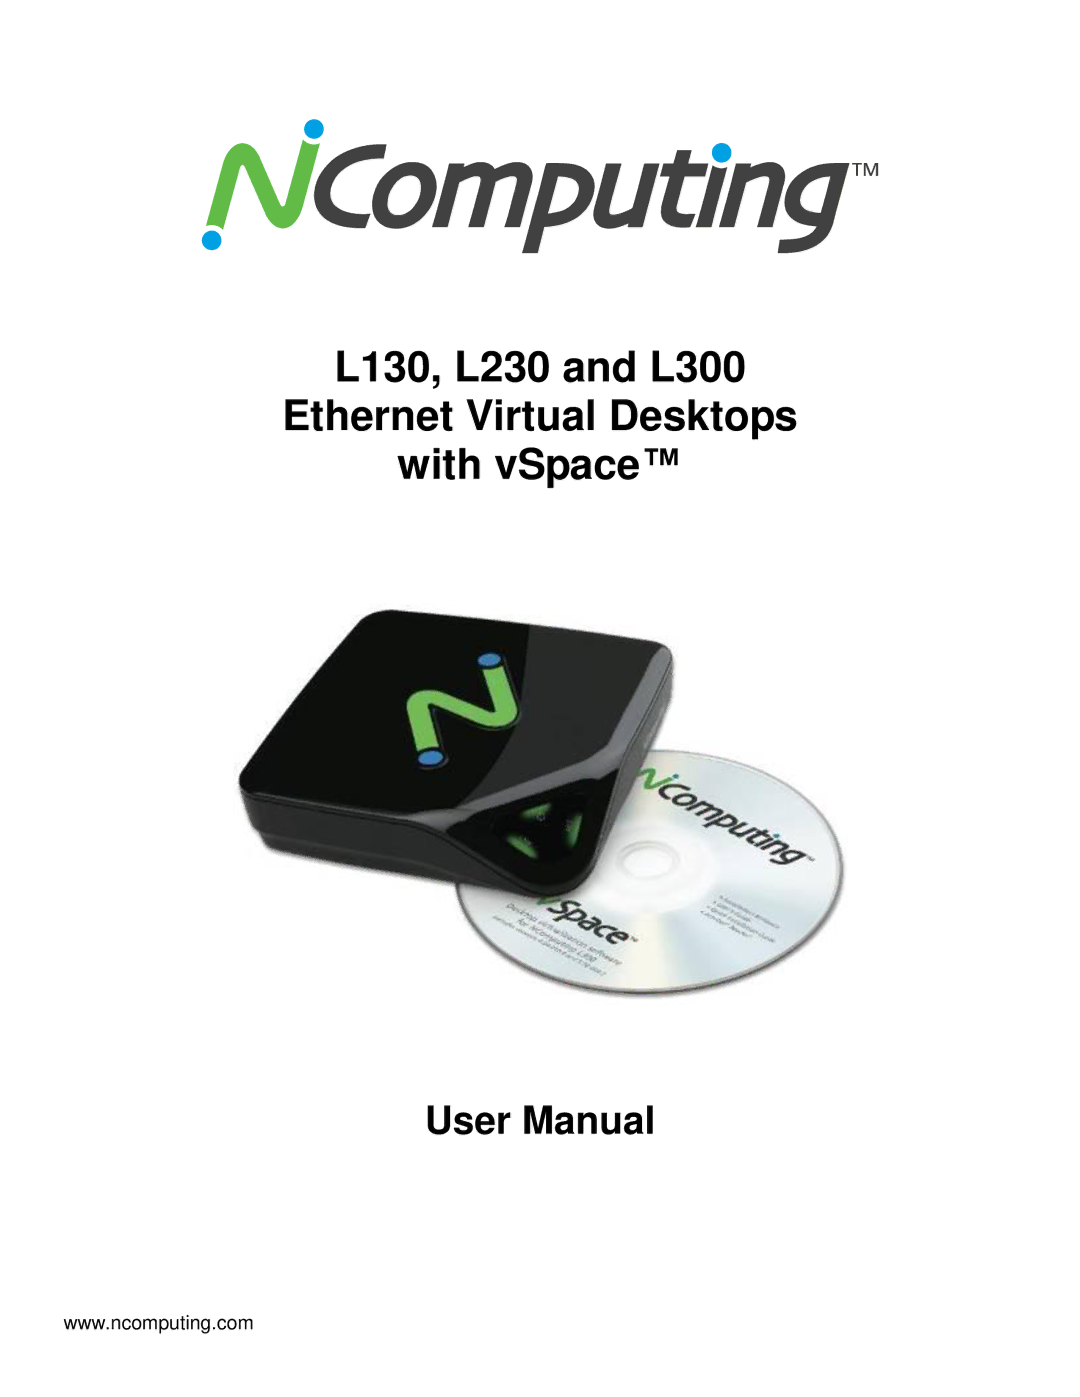 NComputing user manual L130, L230 and L300 Ethernet Virtual Desktops With vSpace 